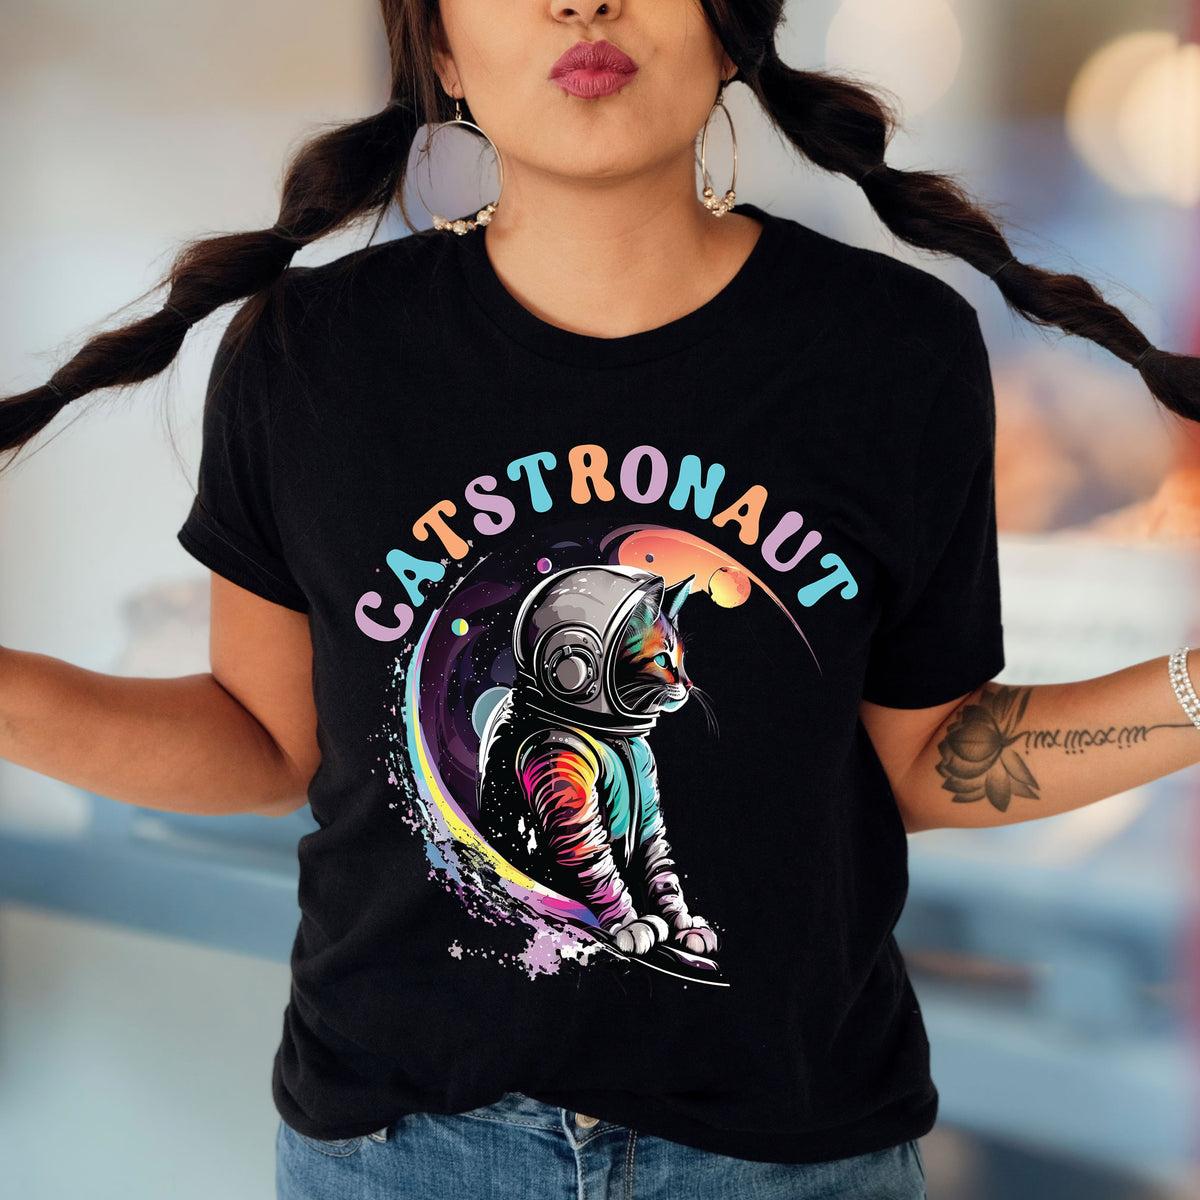 Catstronaut Funny Cat Shirt |Astronaut Shirt | Black T-shirt